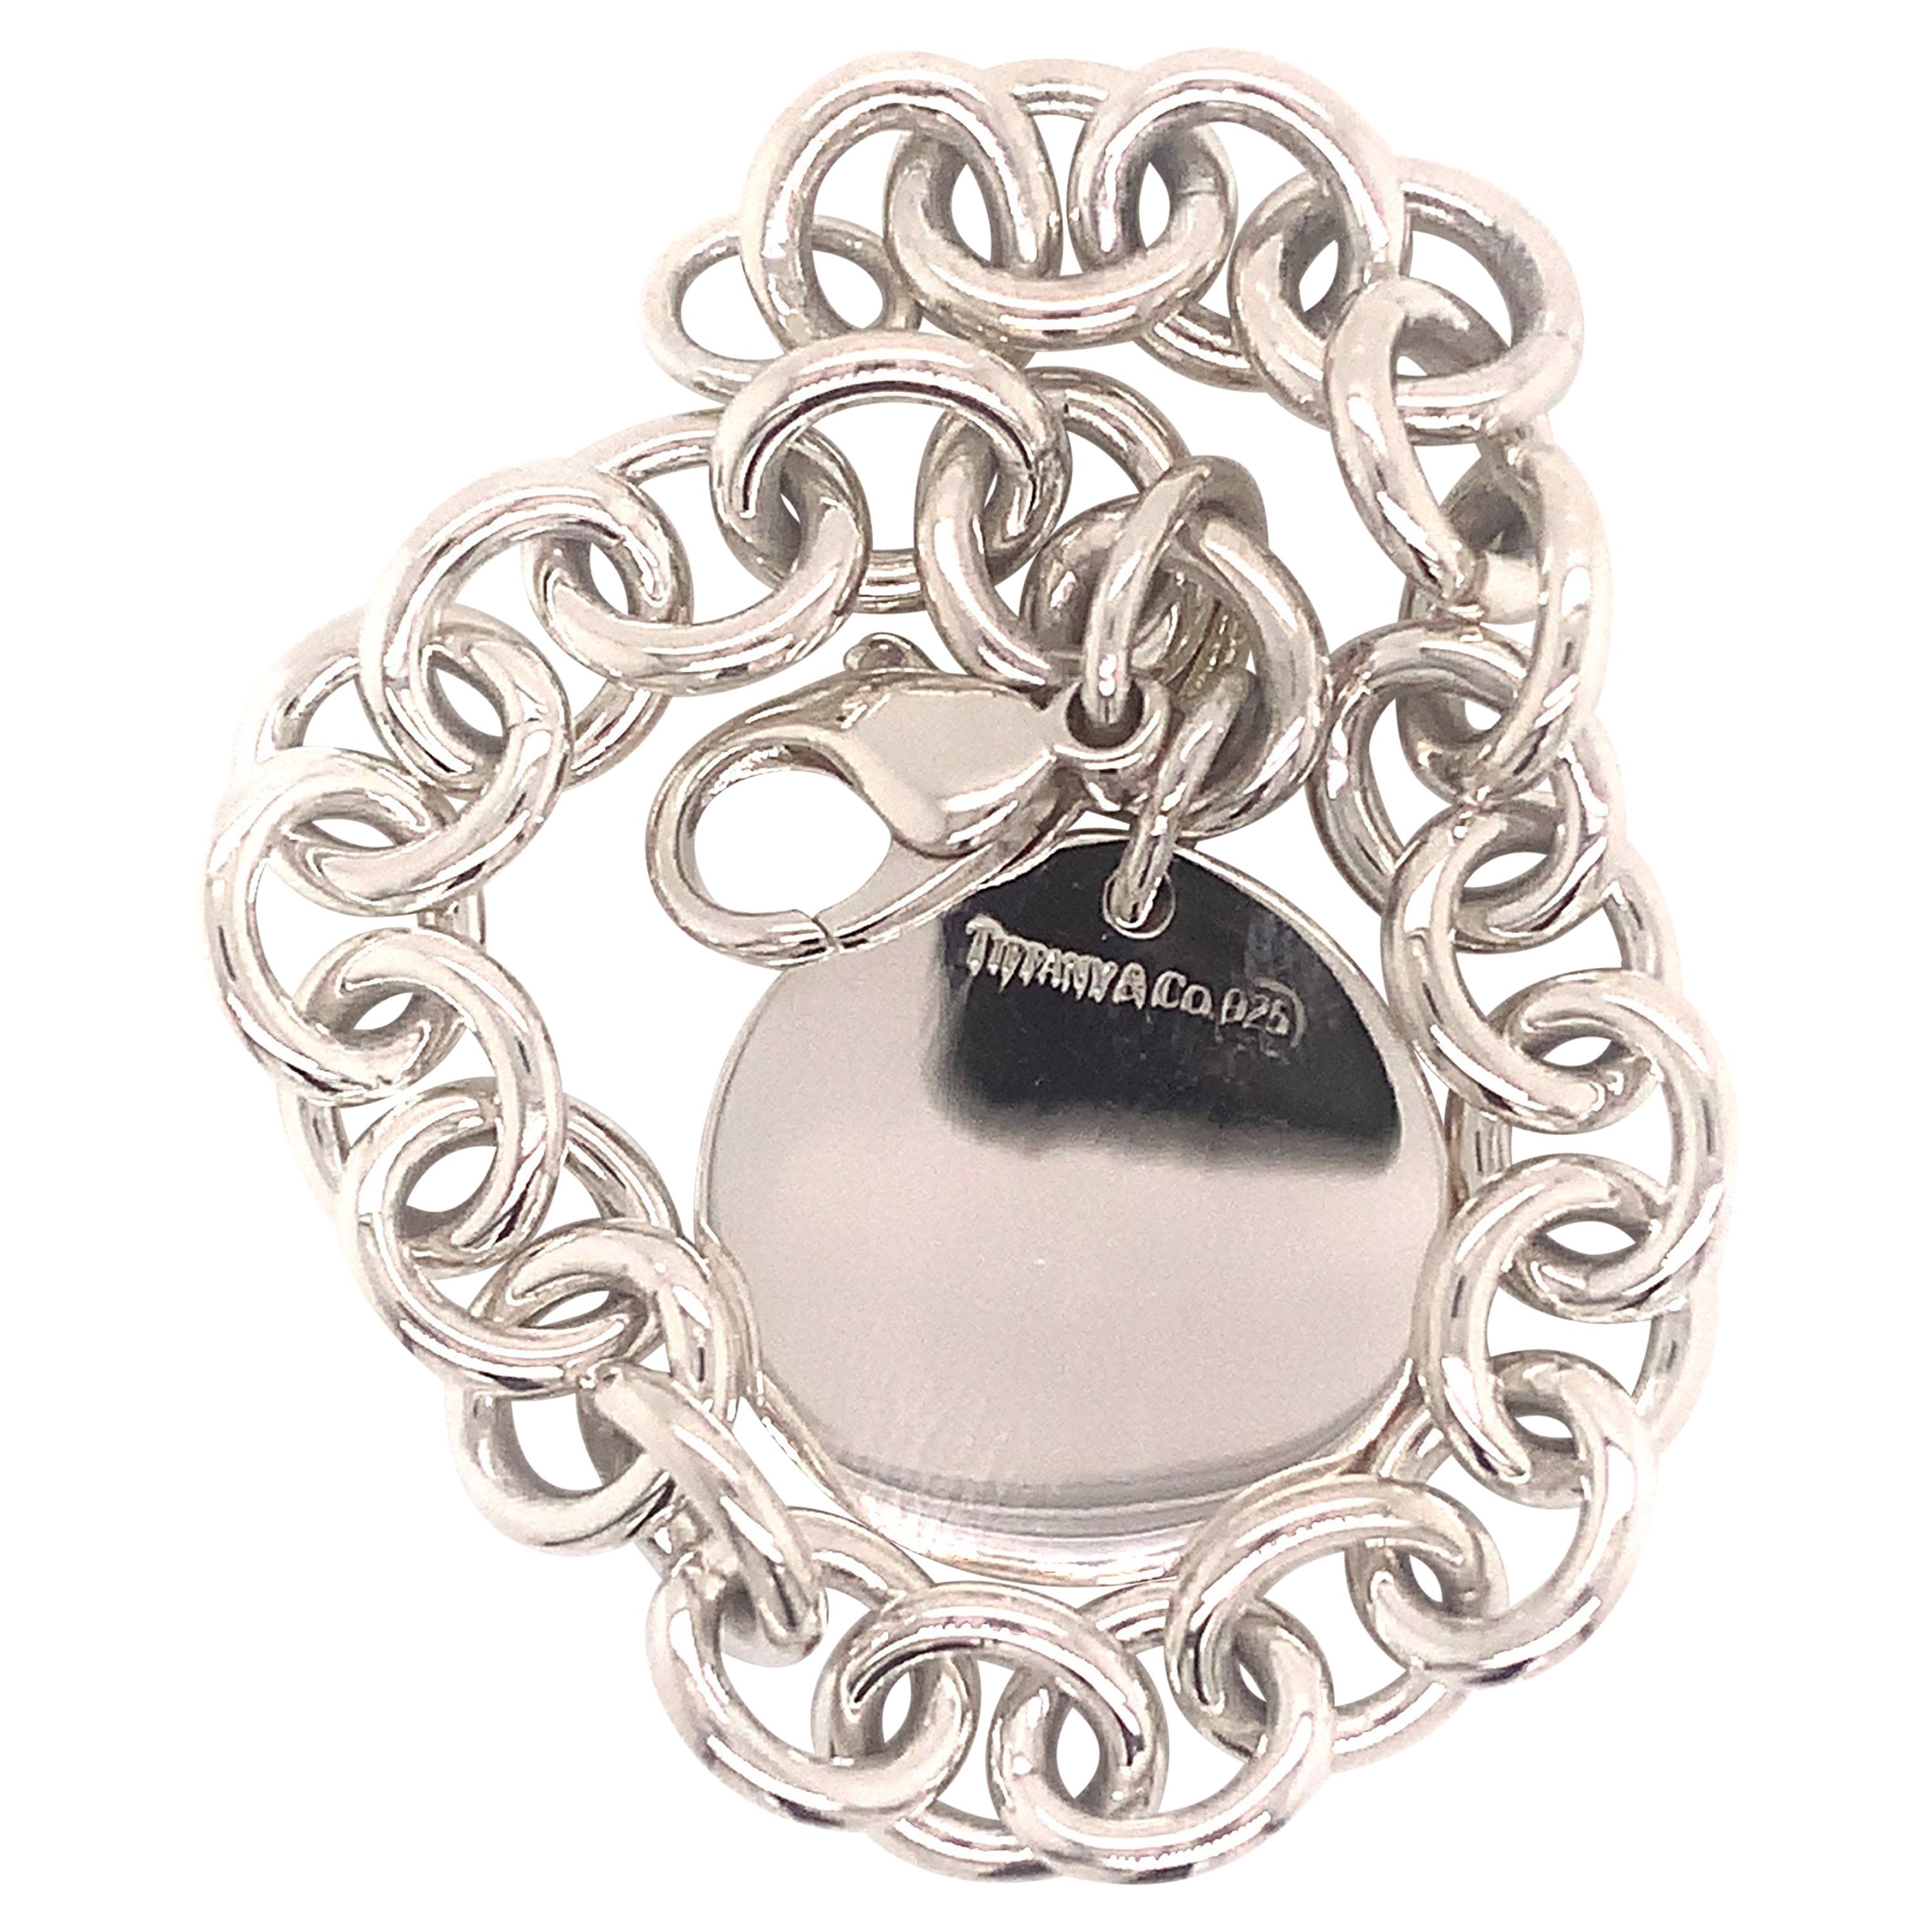 Tiffany & Co. Estate Bracelet Sterling Silver